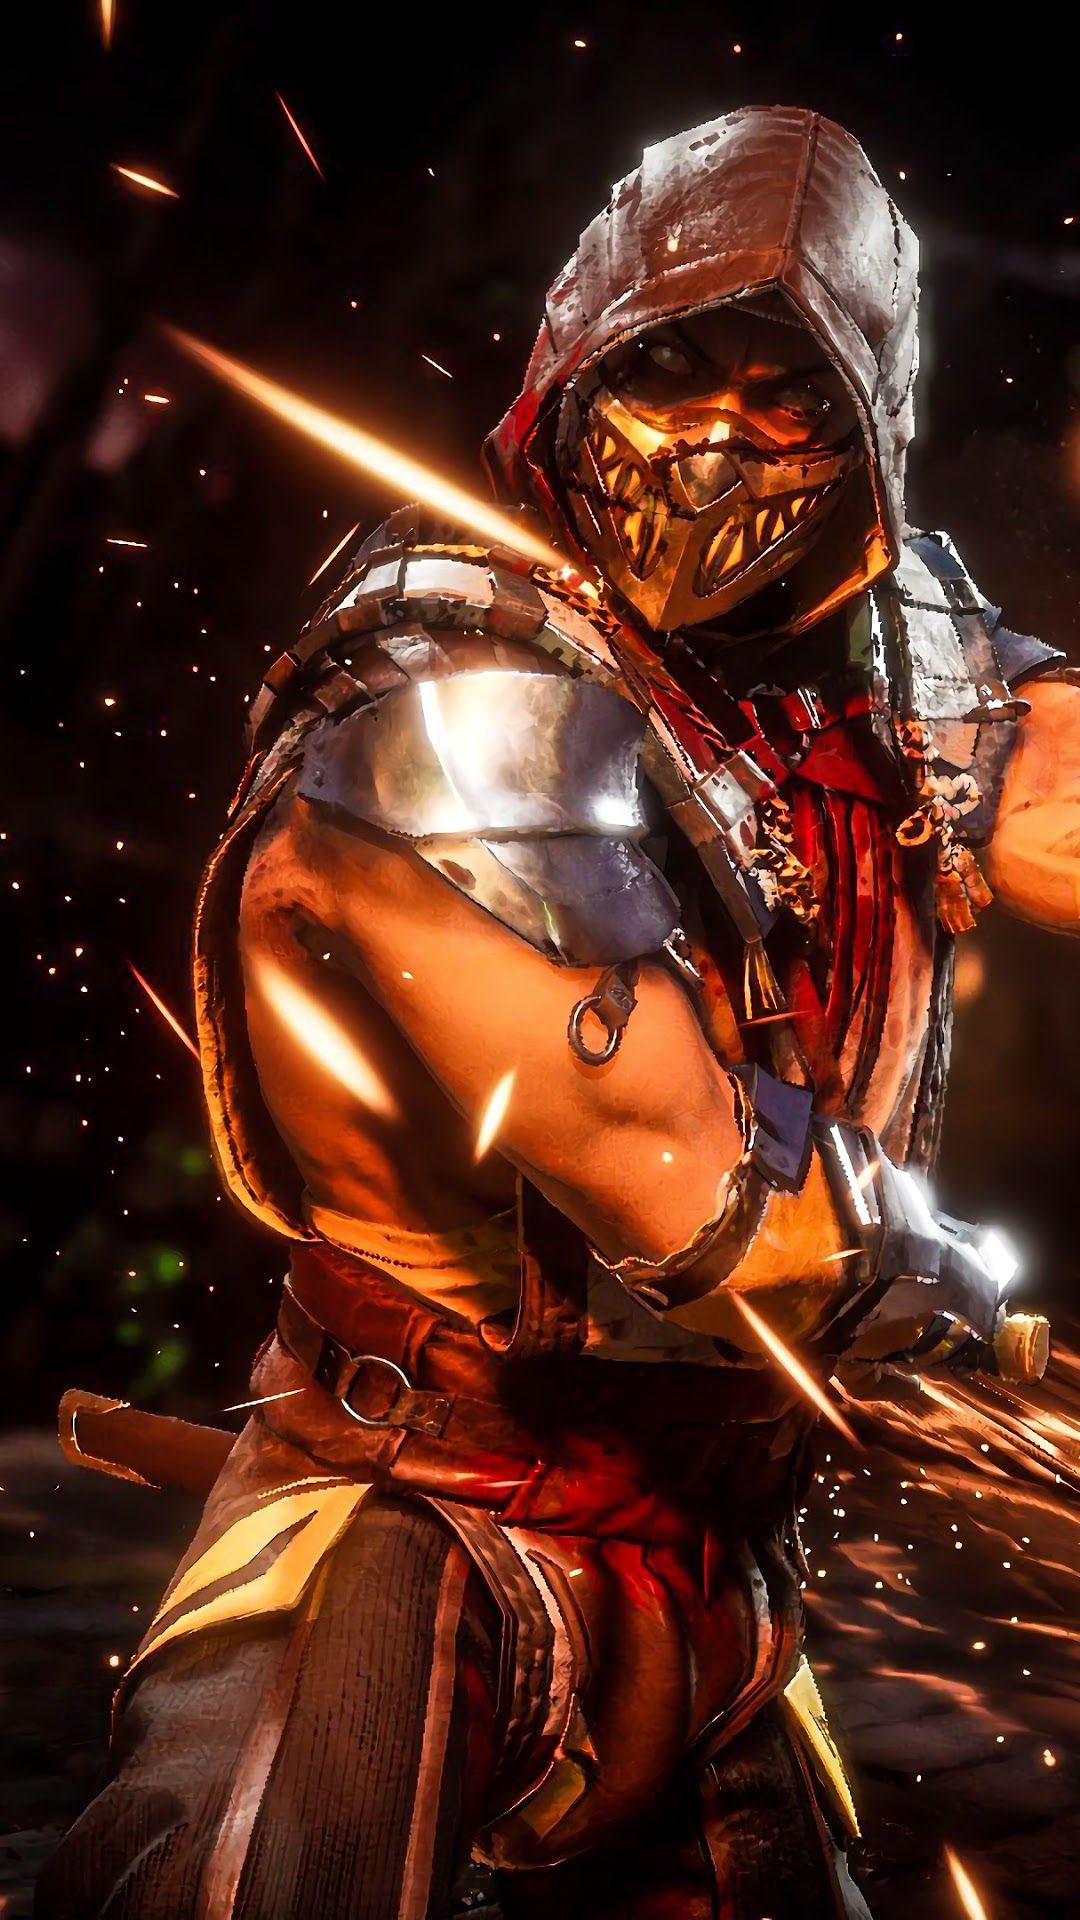 Scorpion, Mortal Kombat 11 phone HD Wallpaper, Image, Background, Photo and Picture